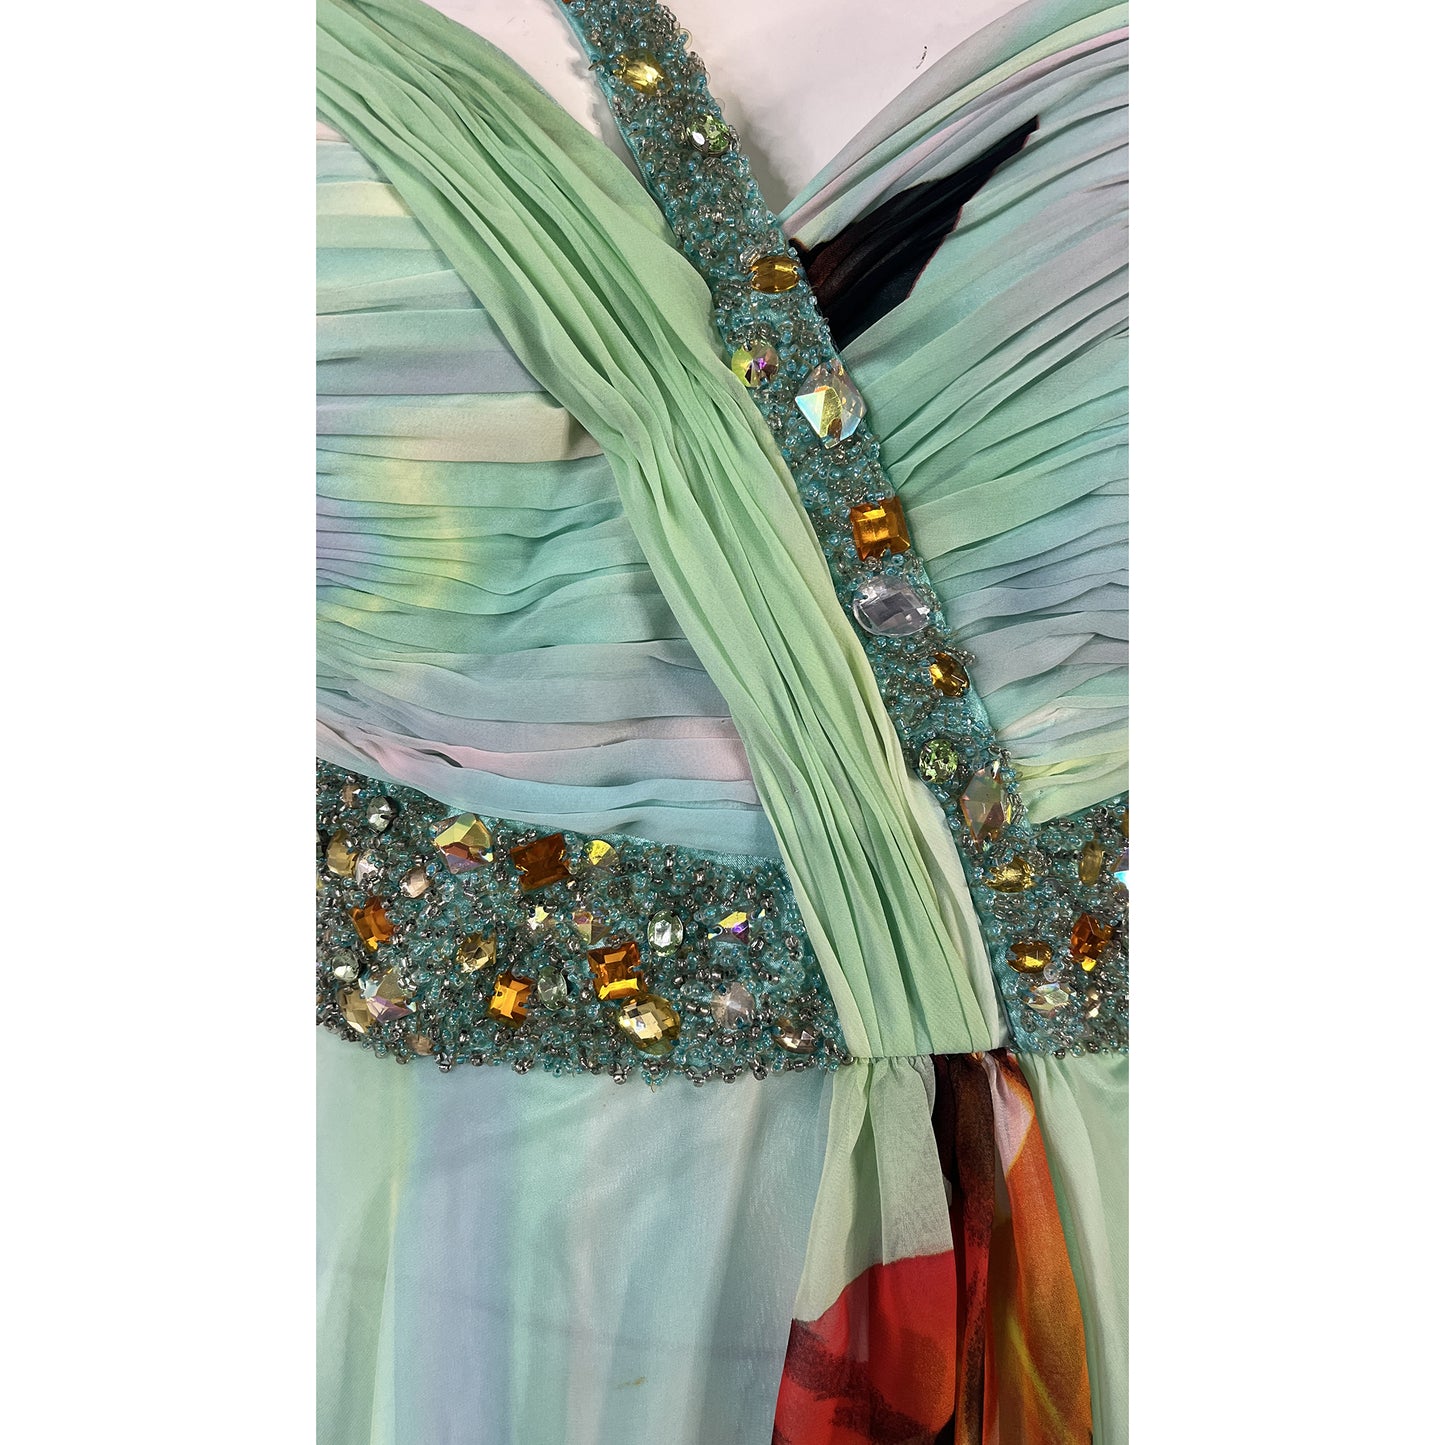 Cassandra Stone Gown One-Shoulder Rhinestone Embellished Floral Mint, Orange Size 6 SKU 000365-5